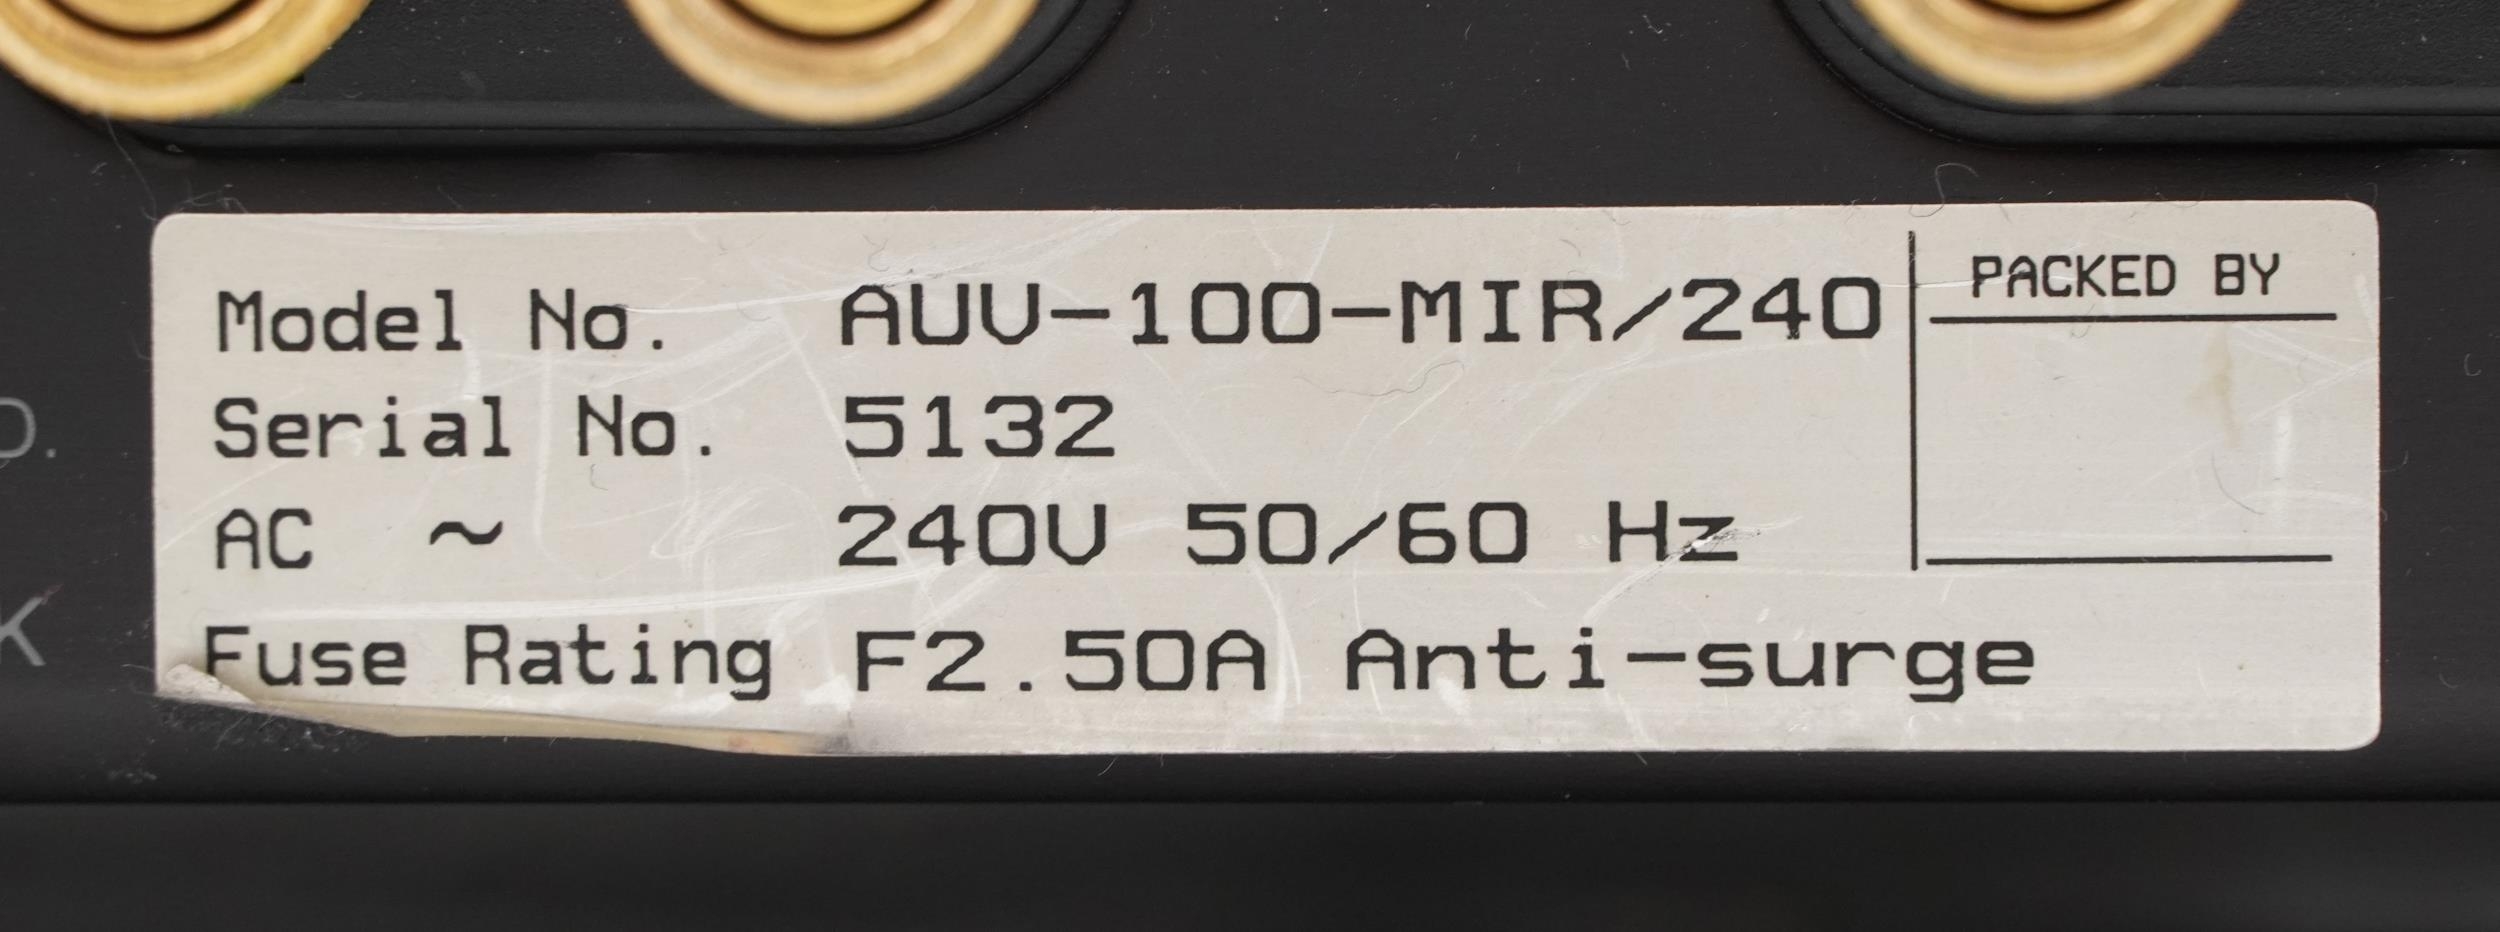 Aura Evolution HiFi amplifier model AUV-100-MIR/240 - Image 3 of 3